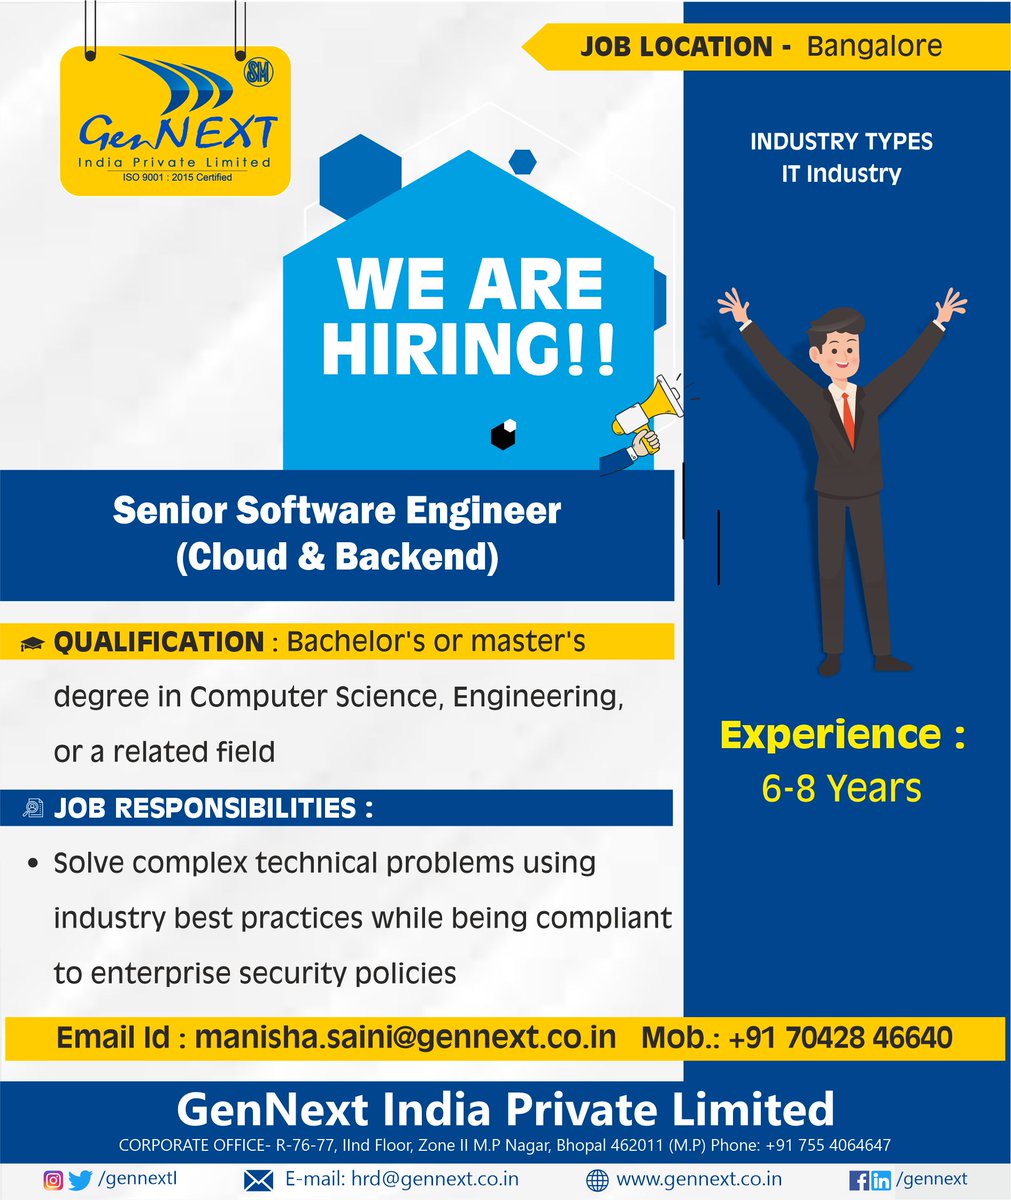 #urgentrequirements

Job Title:  Senior Software Engineer (Cloud & Backend)

#bangalorejob #backend #engineering #computerscience #cloud #hiring2023 #jobalert #jobalerts #job #work #jobalerts #vacancyjob #jobneed #liabilties #gennext #gennexthiring #gennextjob